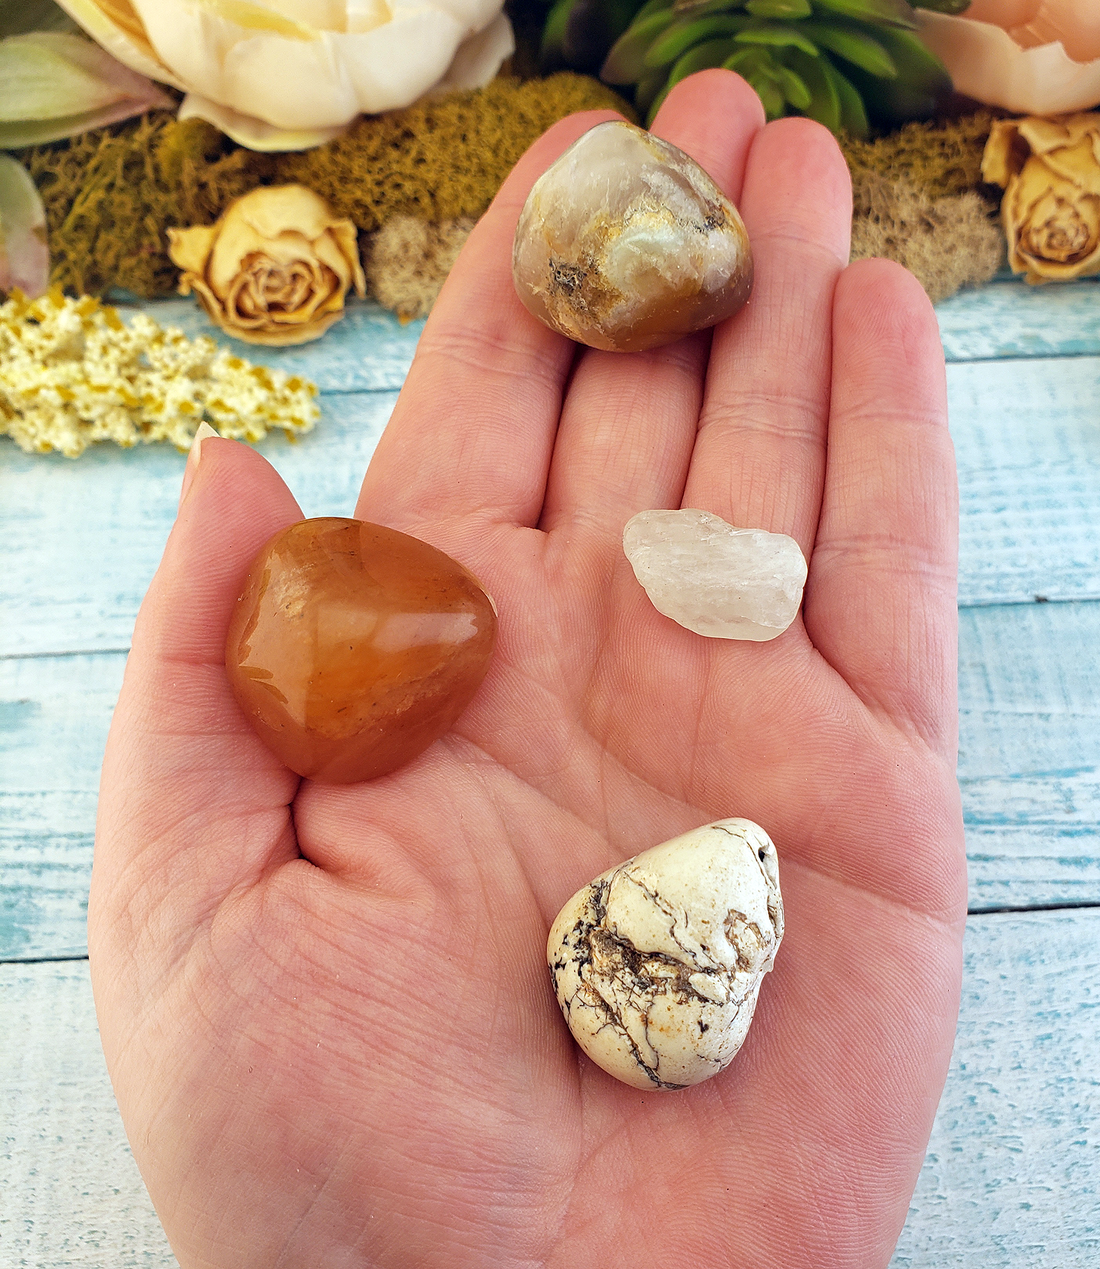 Psychic Power & Spiritual Healing Crystal Set  - Four Tumbled Stones with Pouch - Aquamarine Opal Gold Quartz